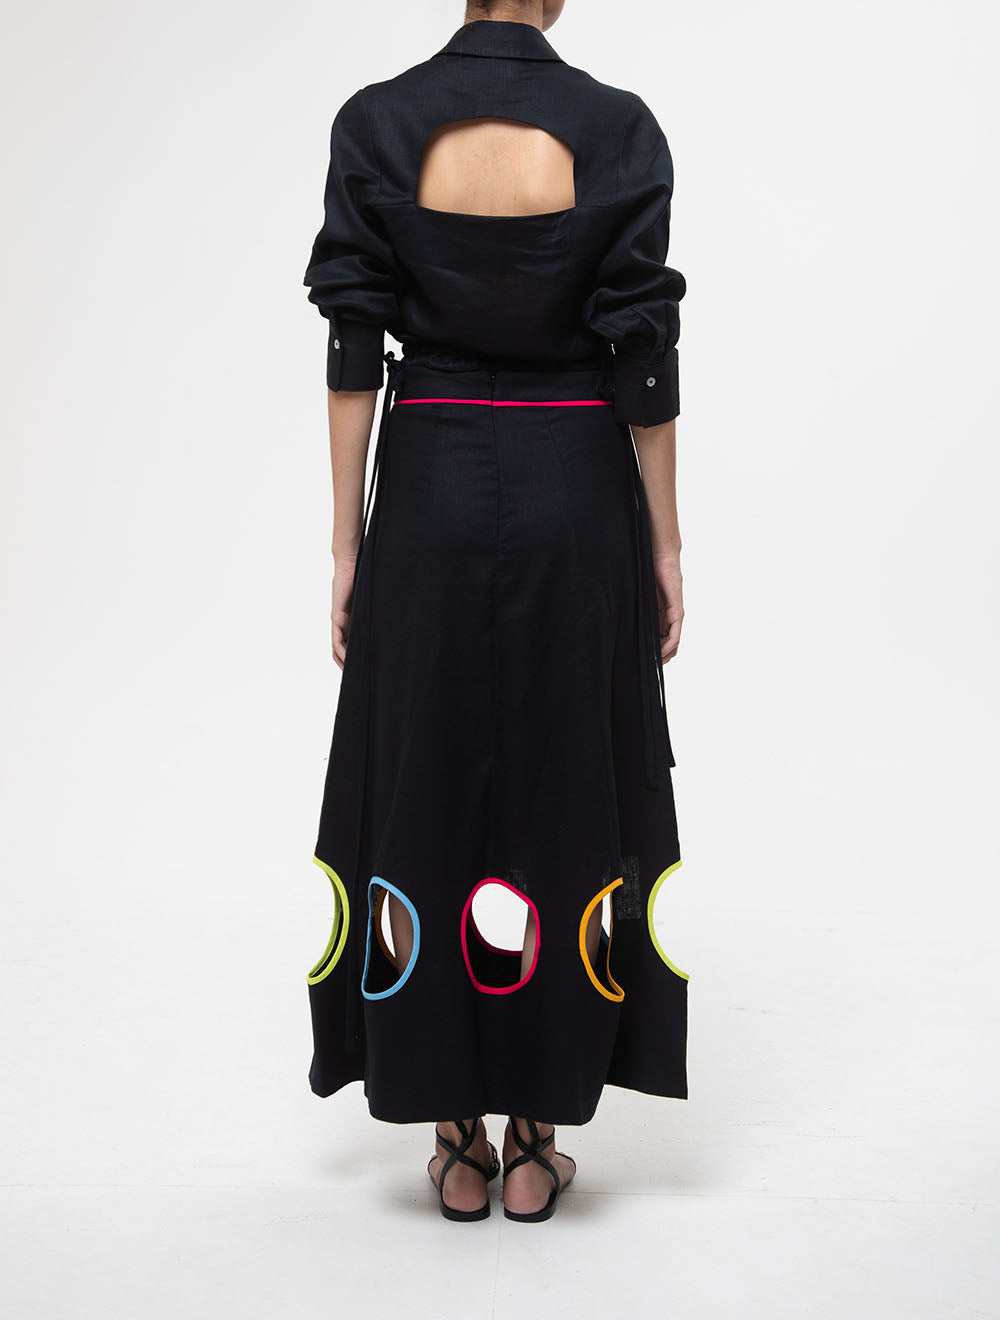 Project Adamo Miro Skirt in Black